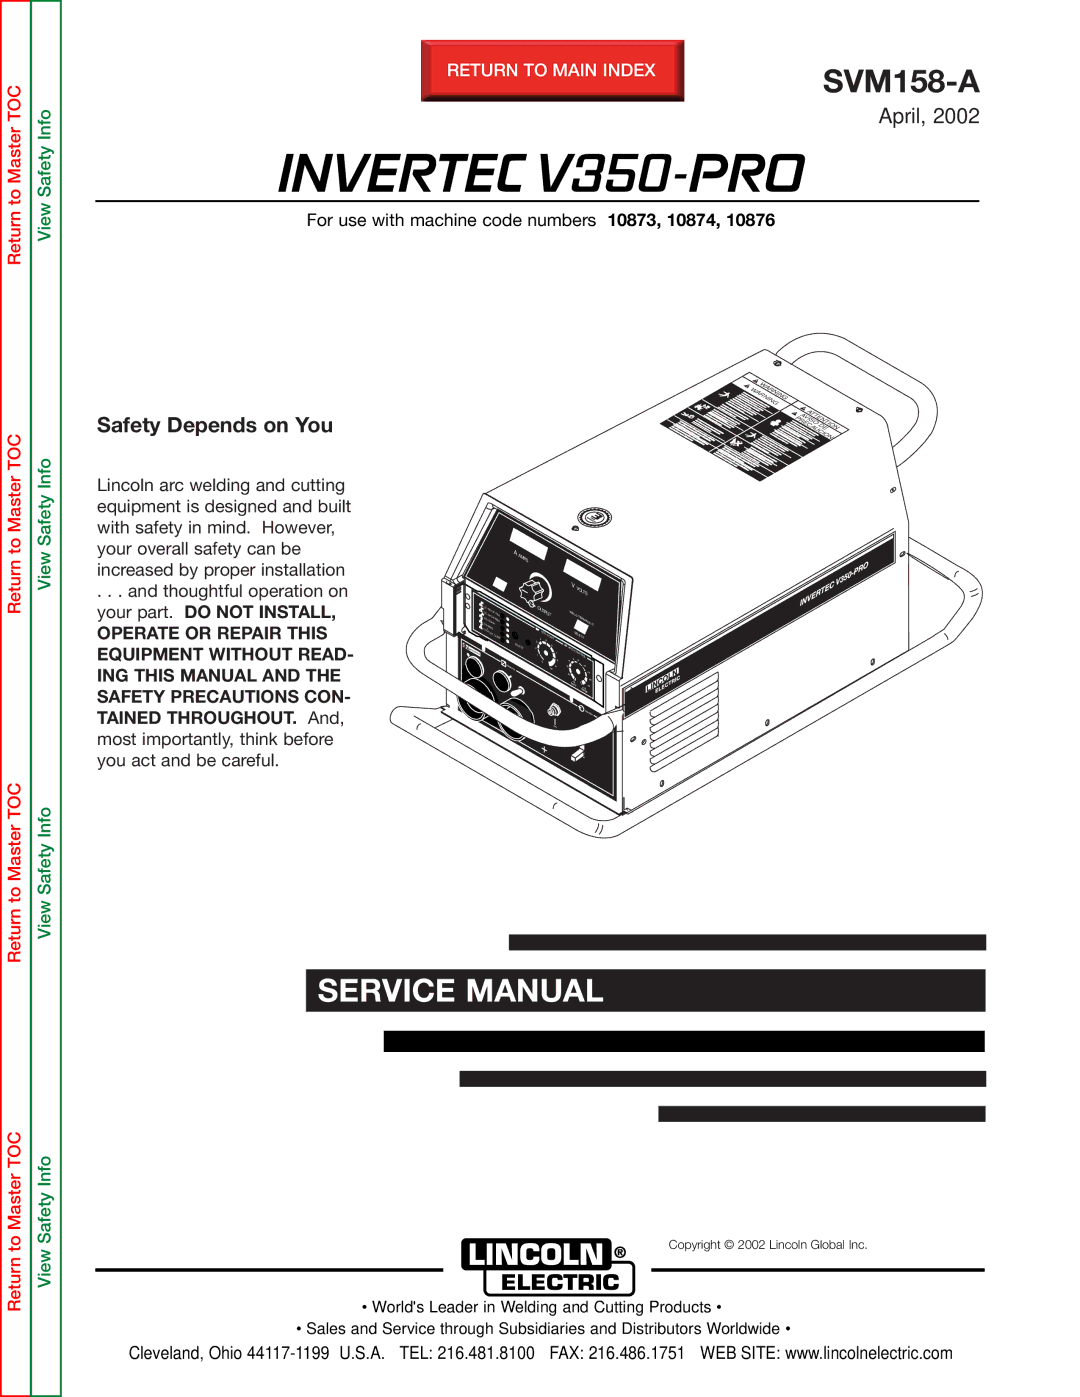 Lincoln Electric SVM158-A service manual Invertec V350-PRO 